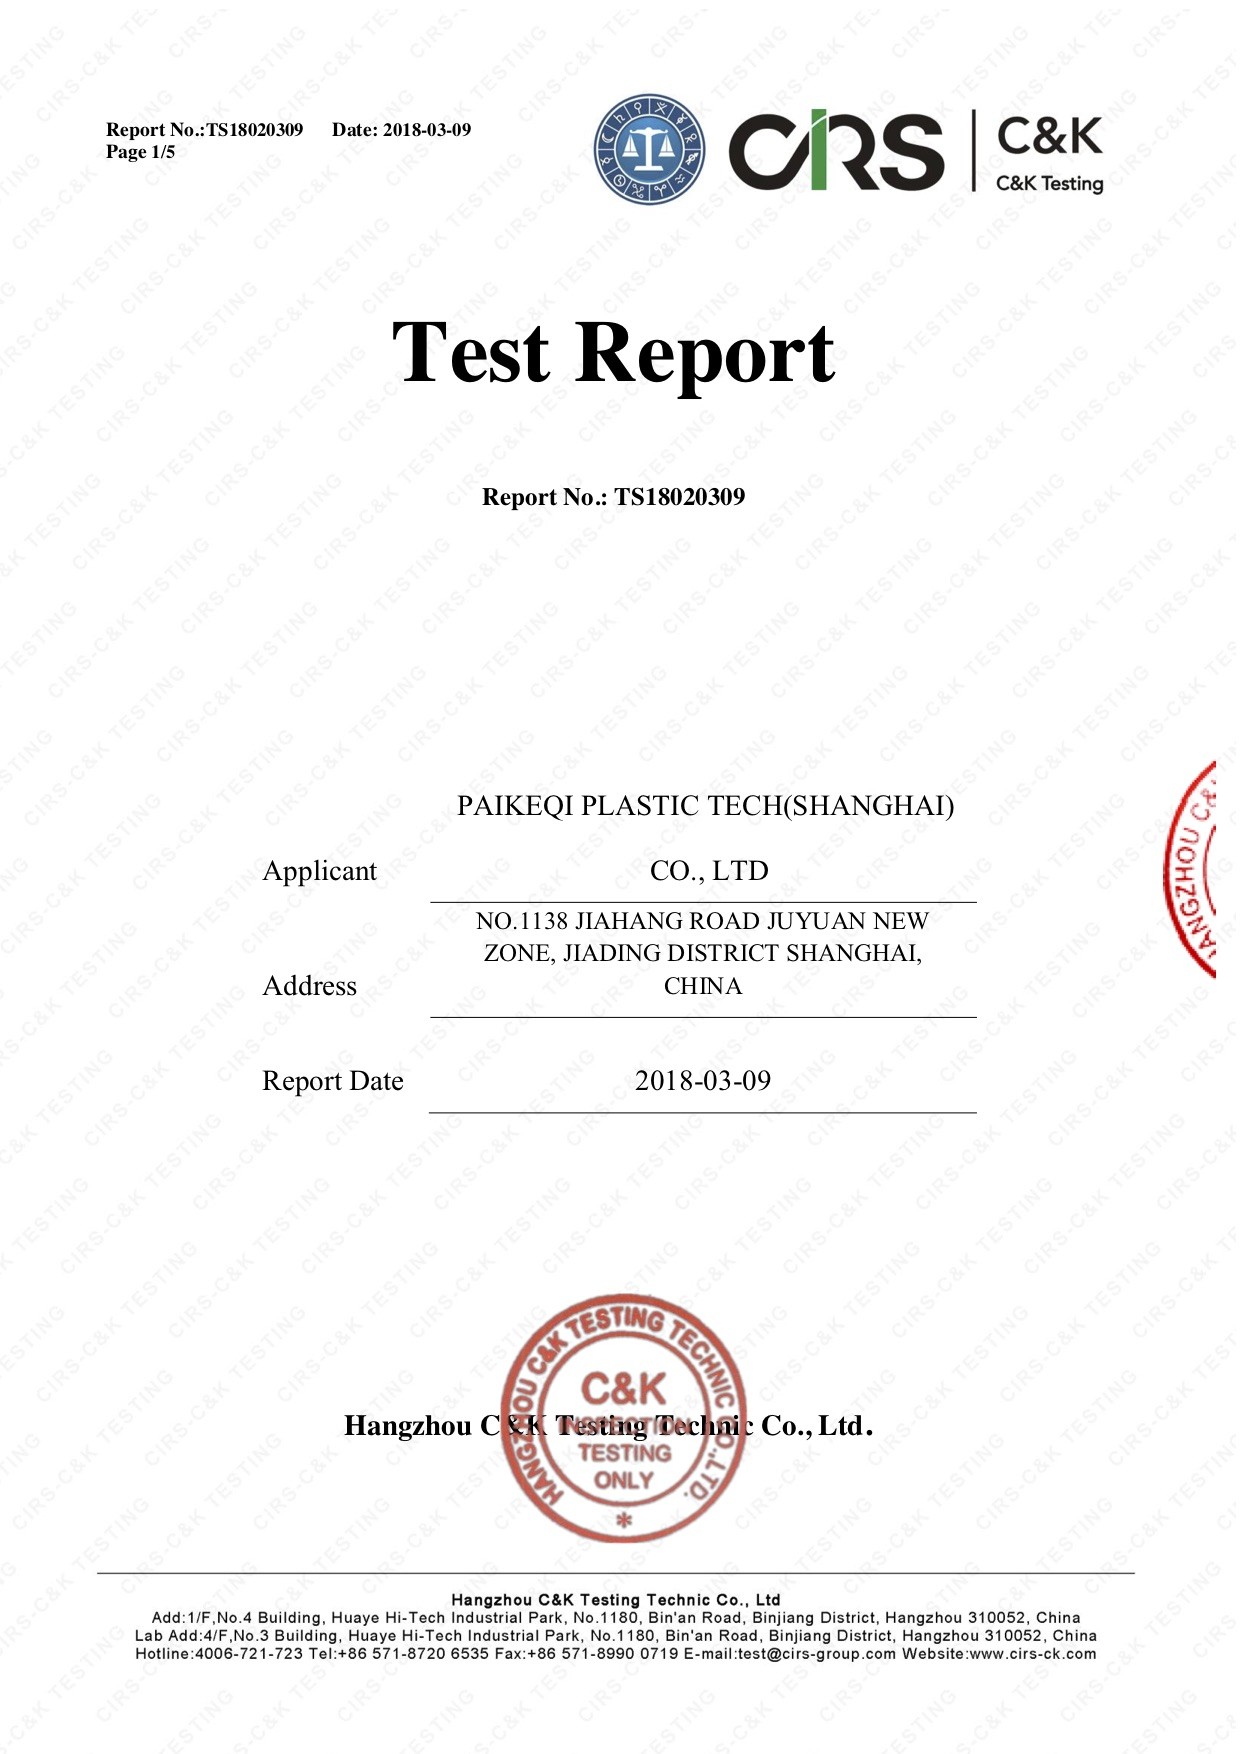 KUNSHAN YGT IMP.&EXP. CO.,LTD Certifications